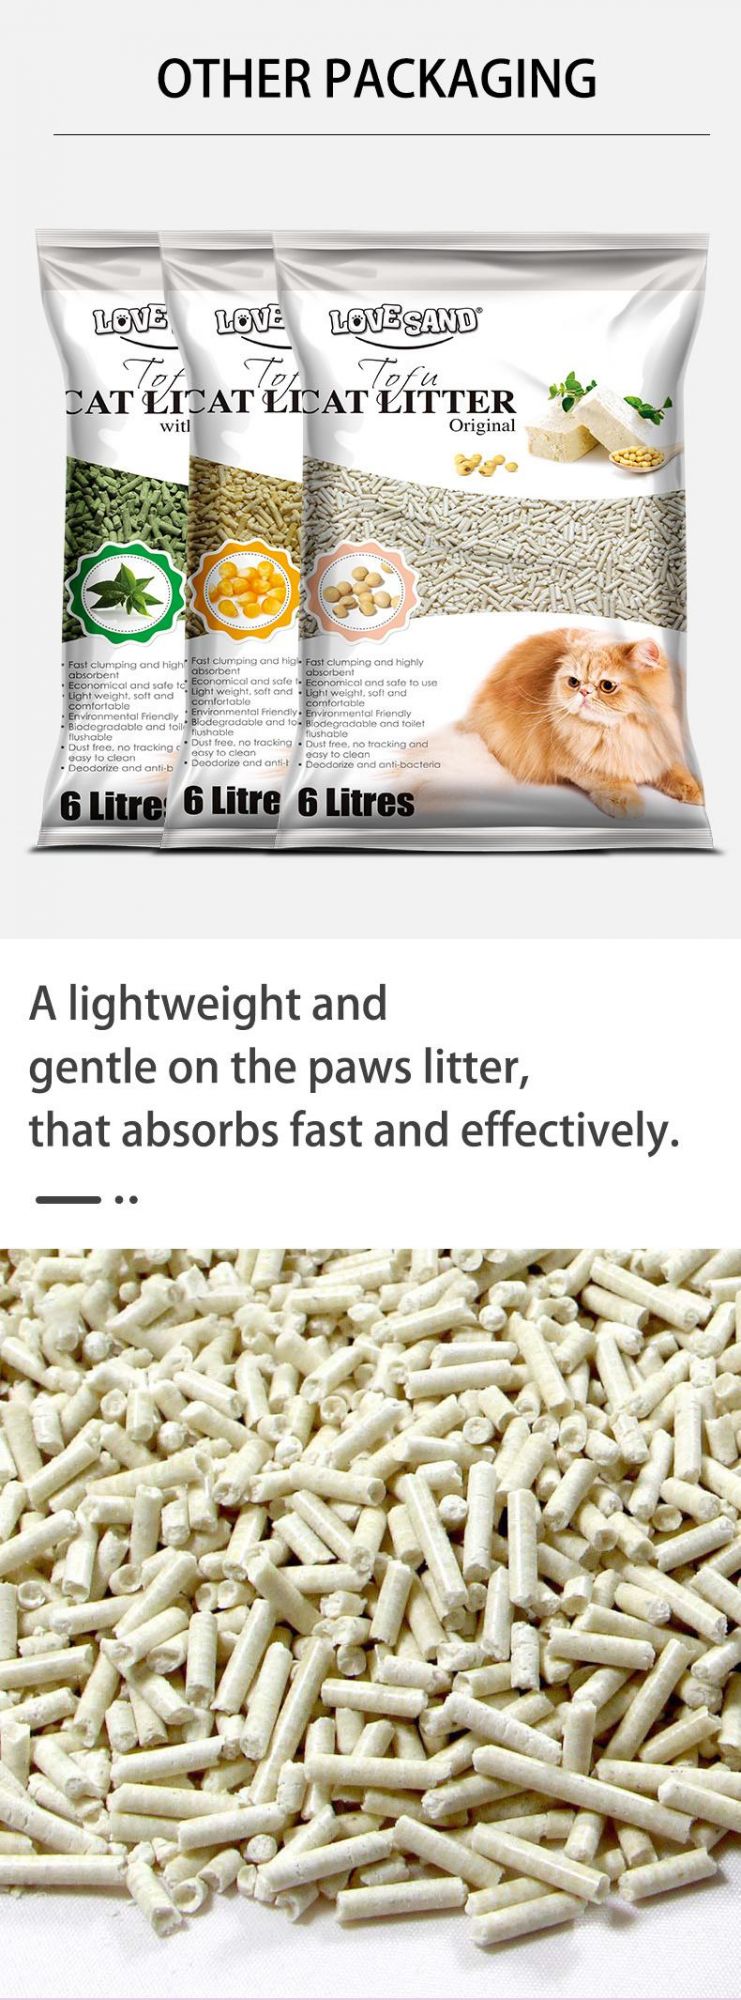 Degradable Colorful Plant Tofu Cat Sand Pet Products